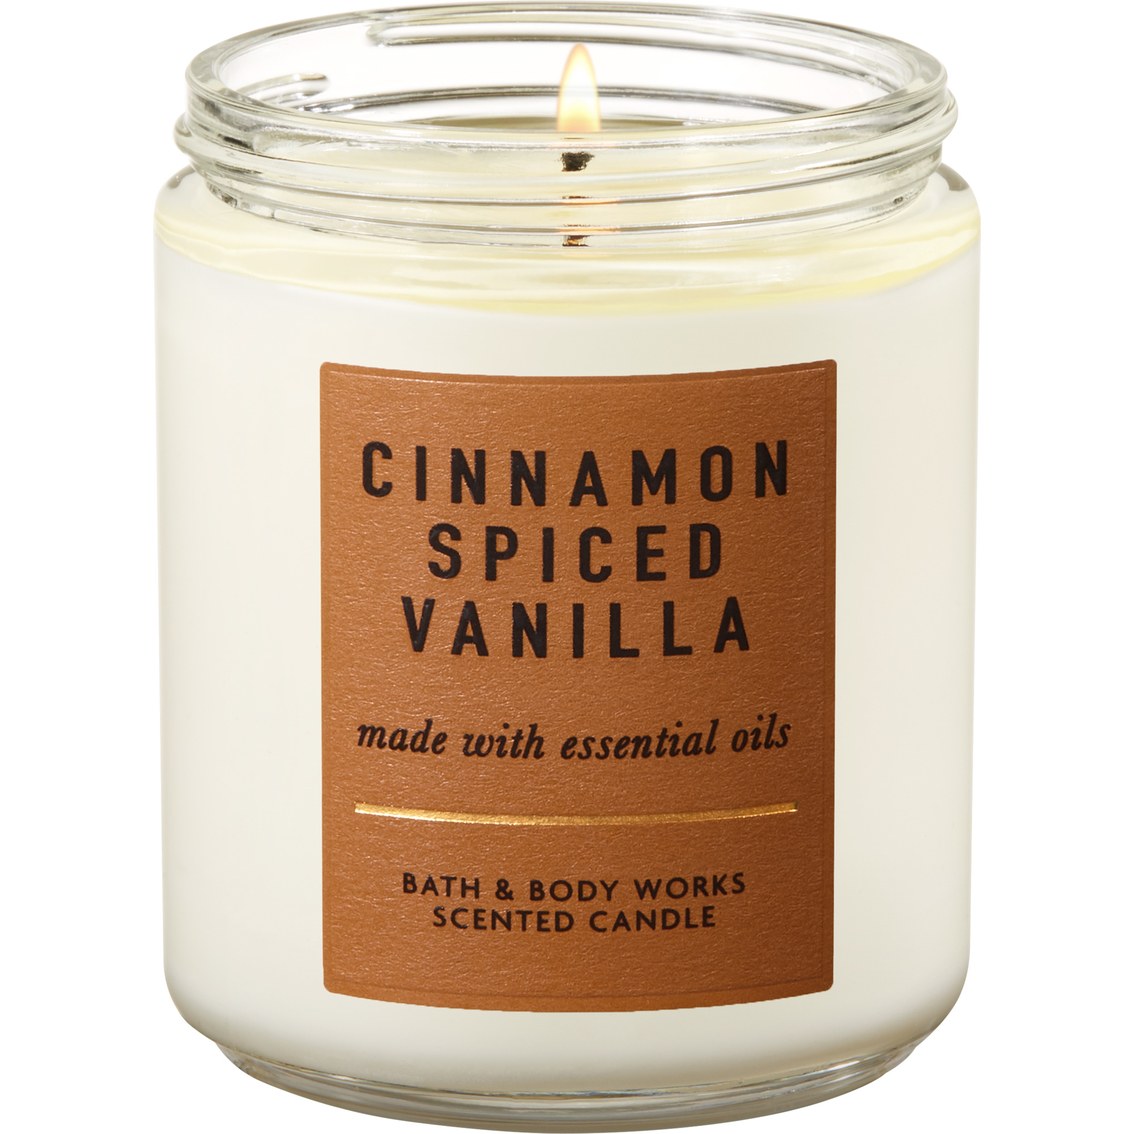 Bath & Body Works Single Wick Candle Cinnamon Spiced Vanilla 